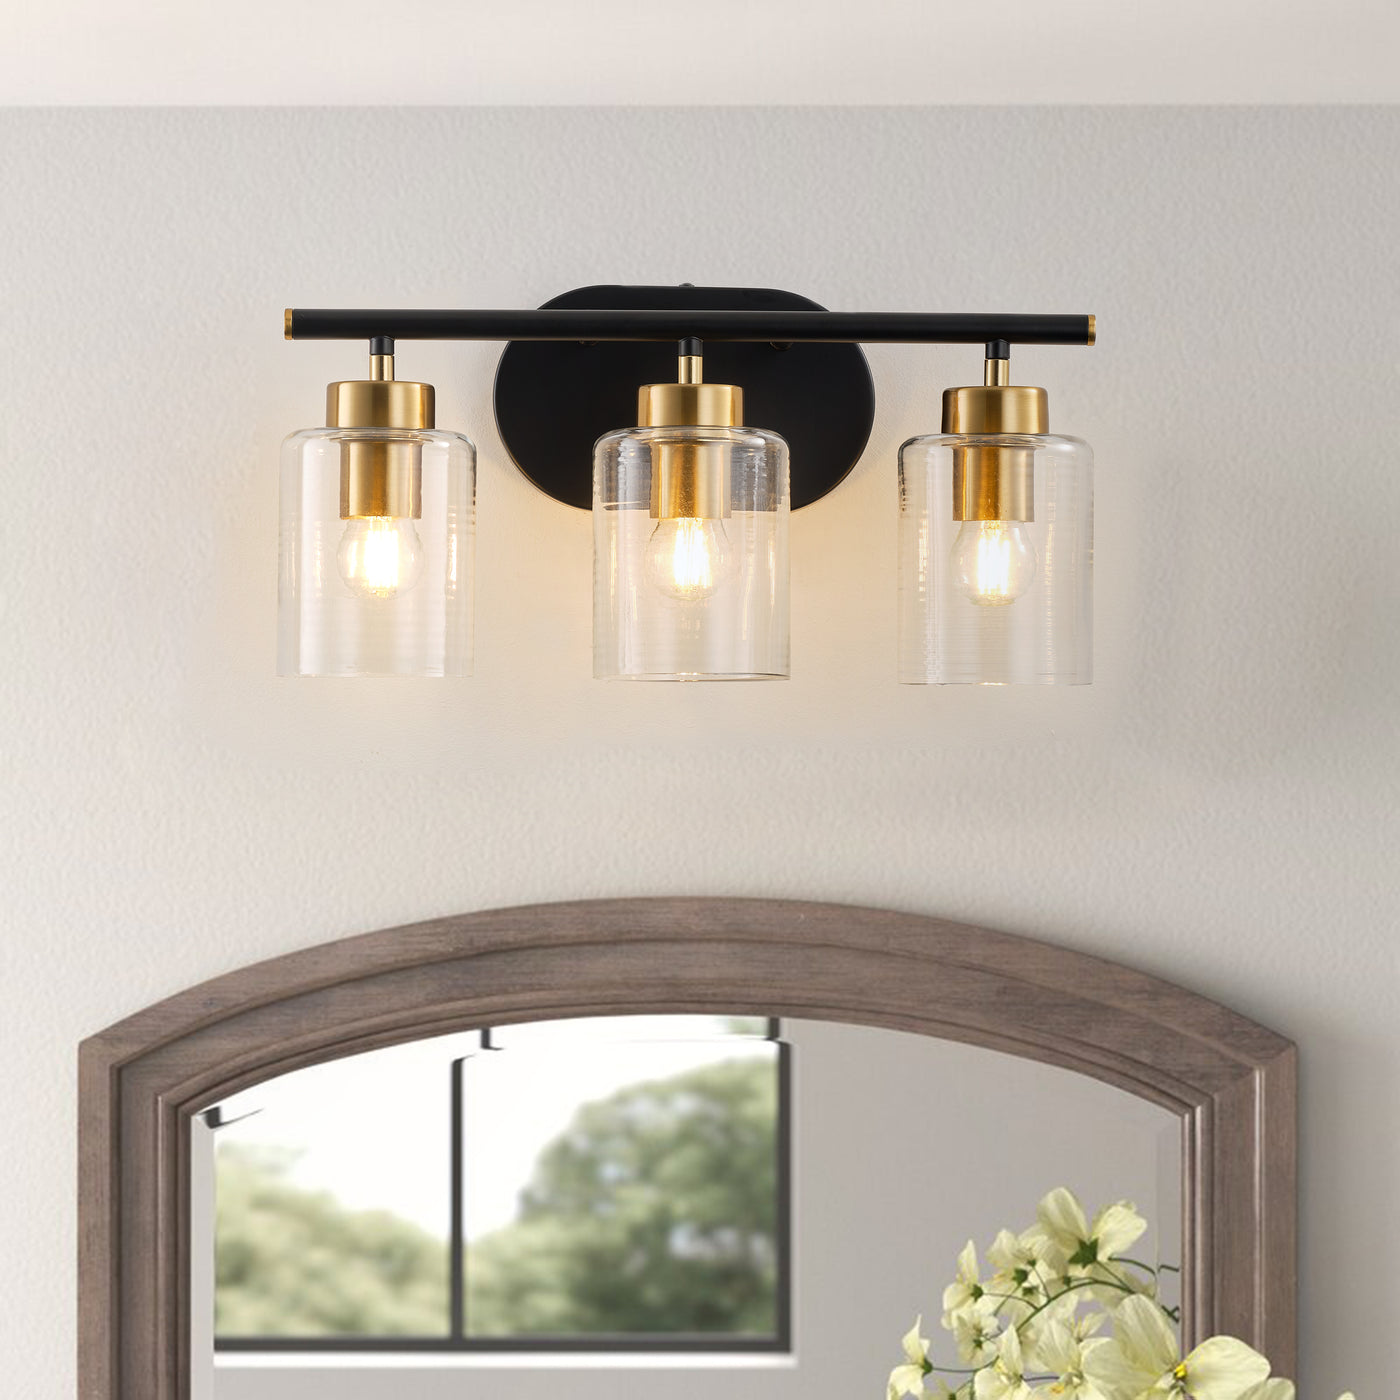 3-Lights Modern with Spiral Glass Shade Bathroom Vanity Lighting